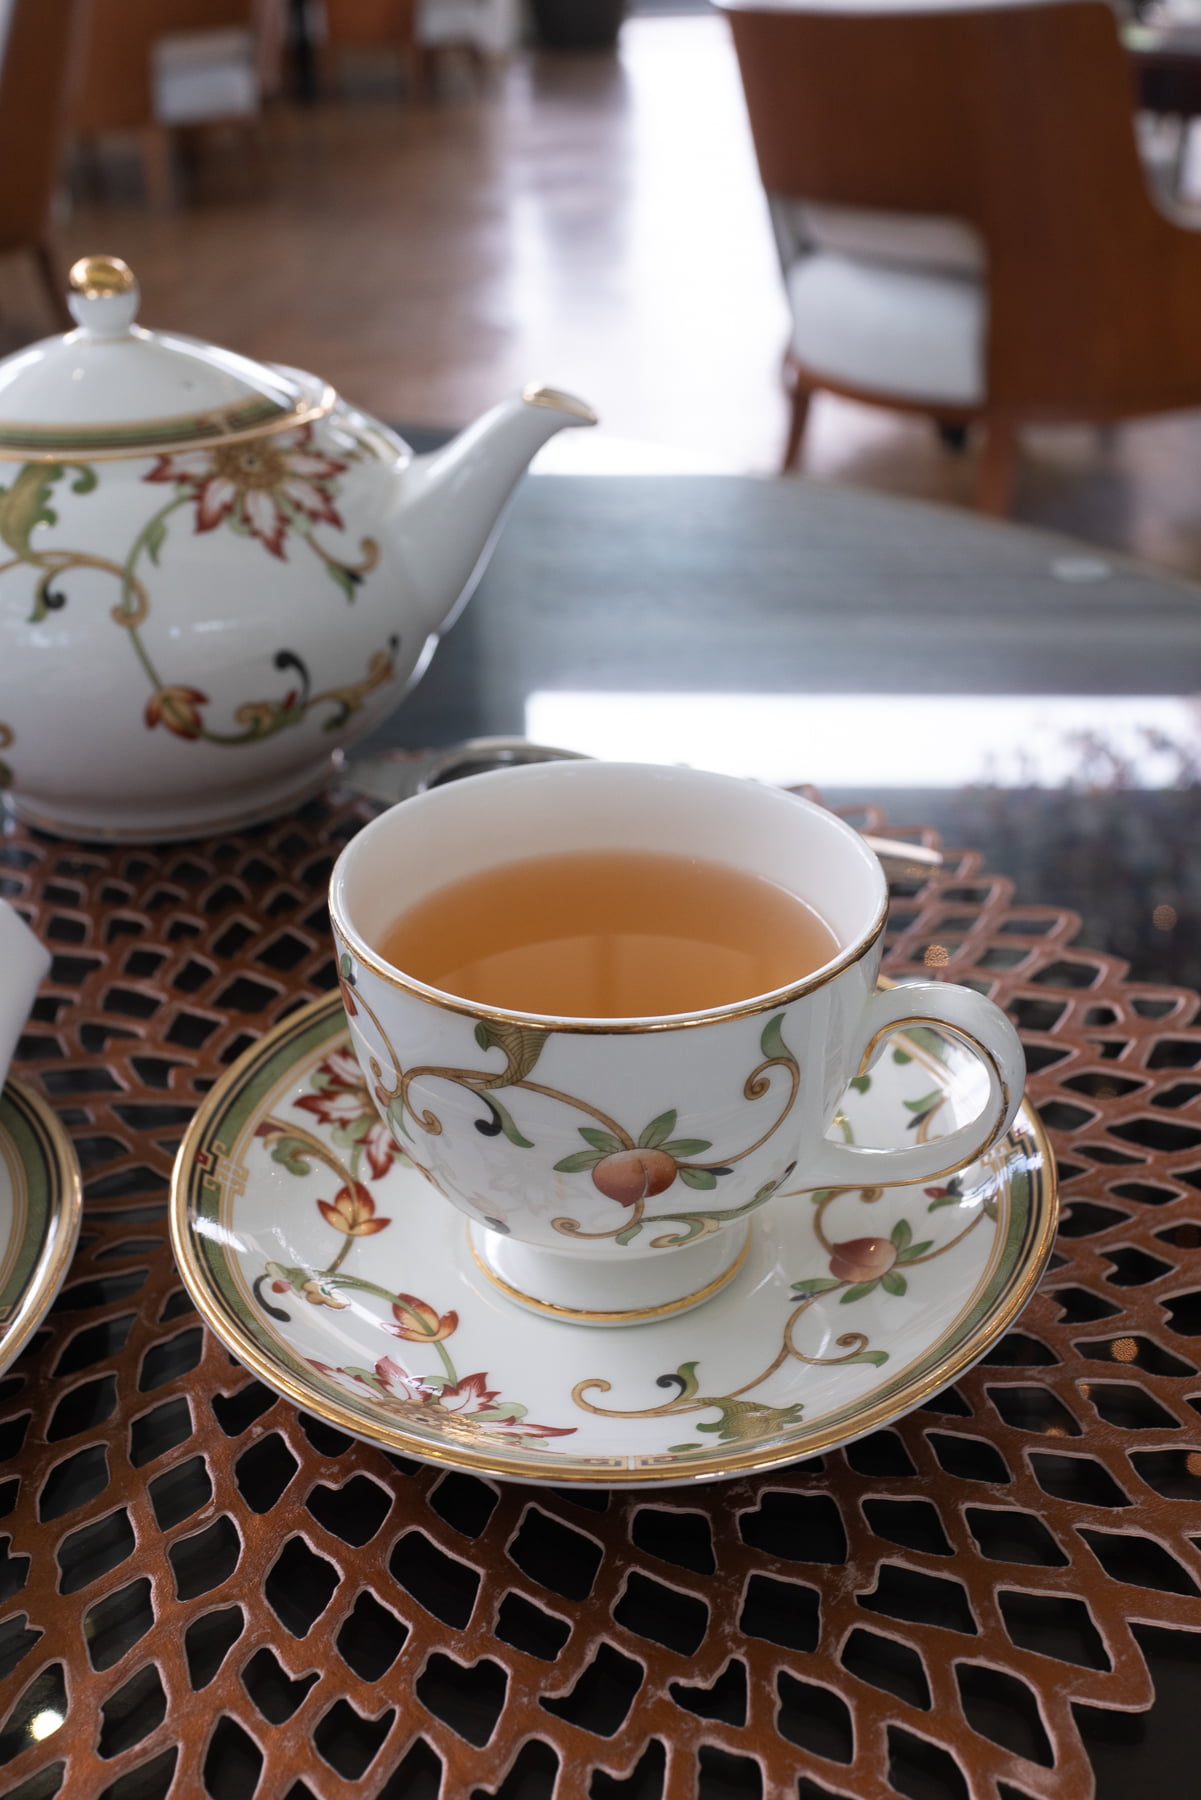 A cup of tea at Kahala Hotel’s afternoon tea.